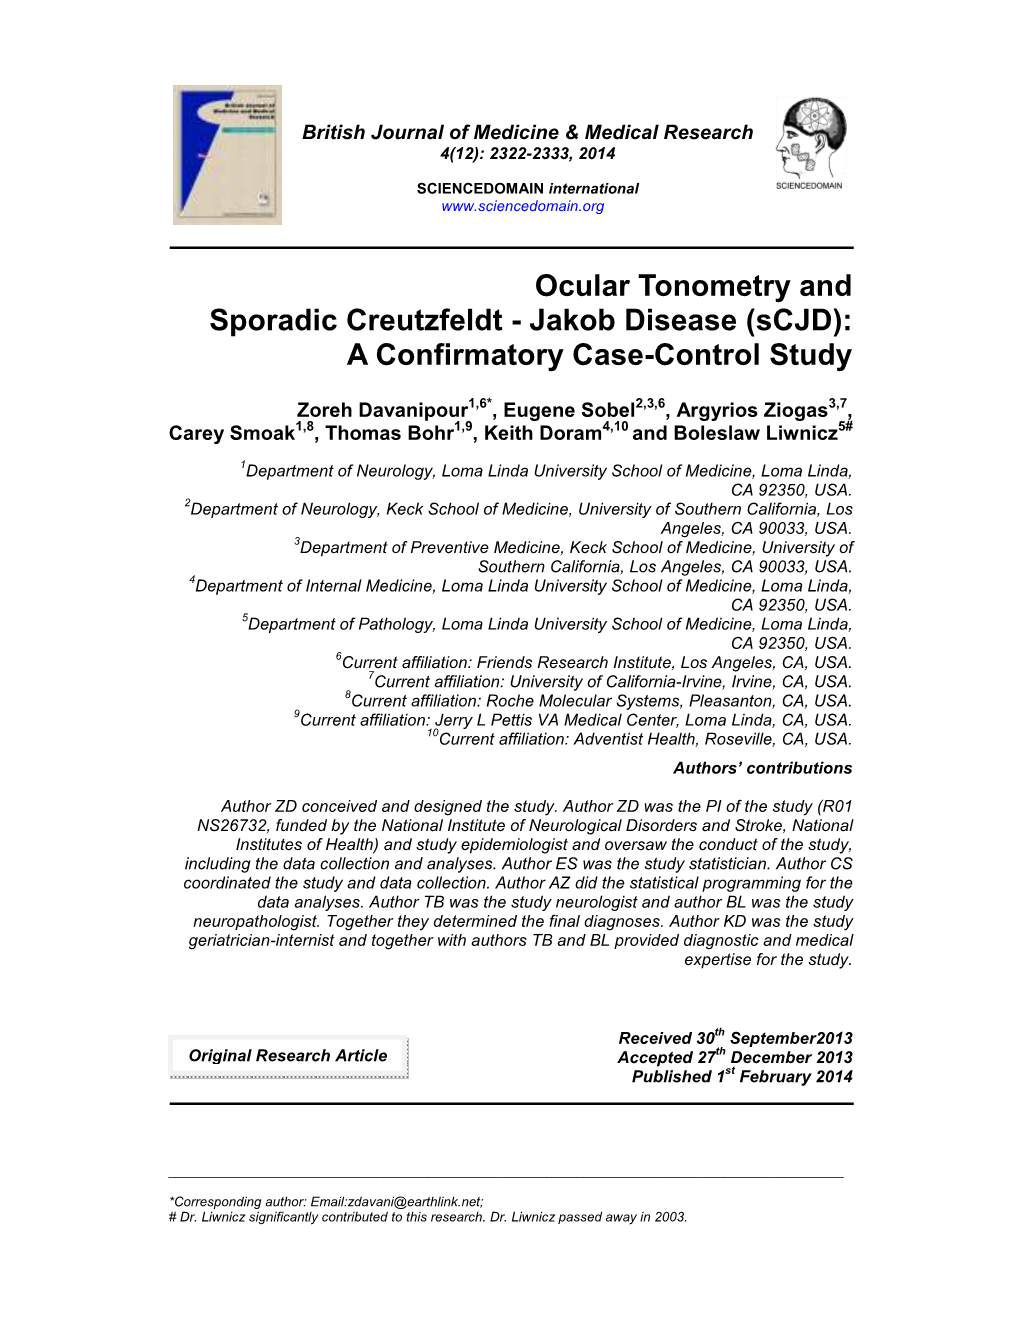 Ocular Tonometry and Sporadic Creutzfeldt - Jakob Disease (Scjd): a Confirmatory Case-Control Study